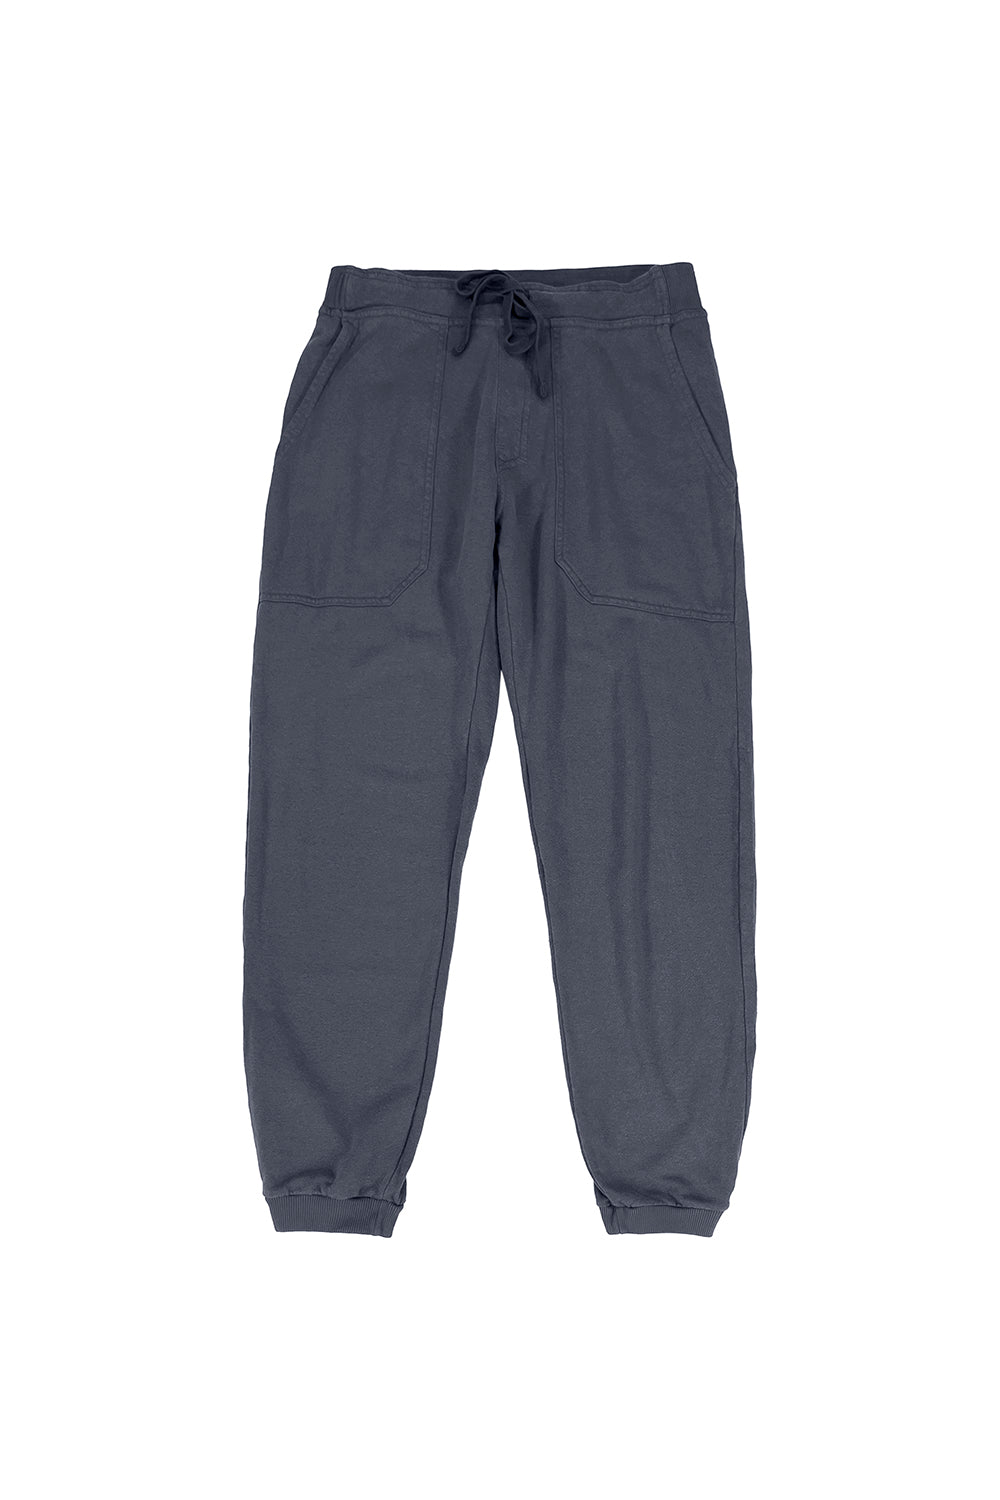 Rockaway Sweatpant | Jungmaven Hemp Clothing & Accessories / Color: Diesel Gray